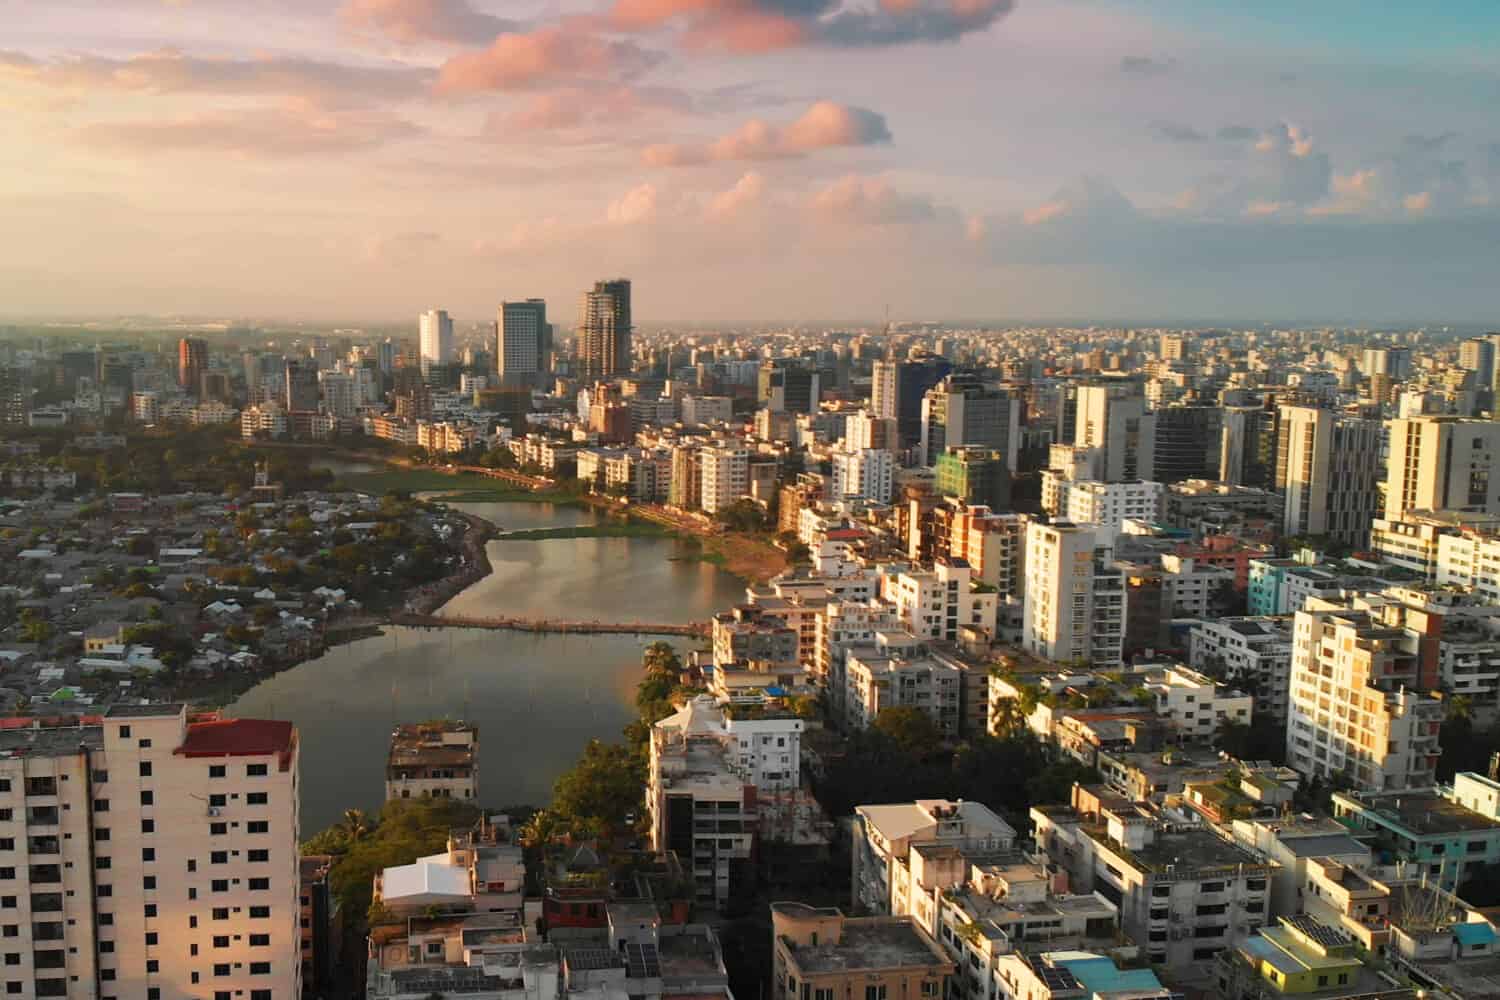 Dhaka skyline from a bird's eye view